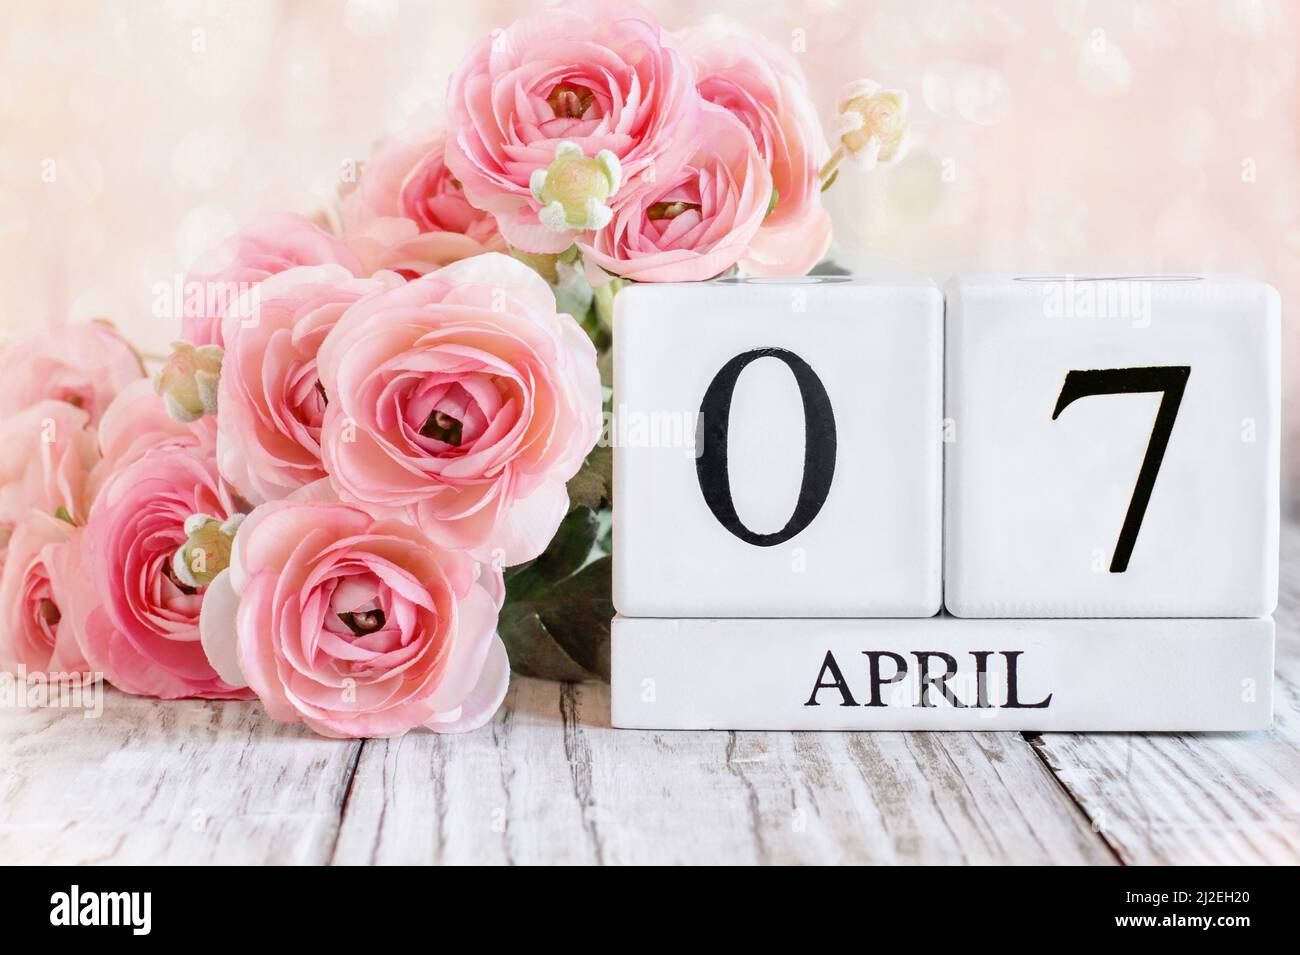 Bloques de calendario de madera blanca con fecha del 7th de abril. Enfoque selectivo con fondo borroso. Foto de stock